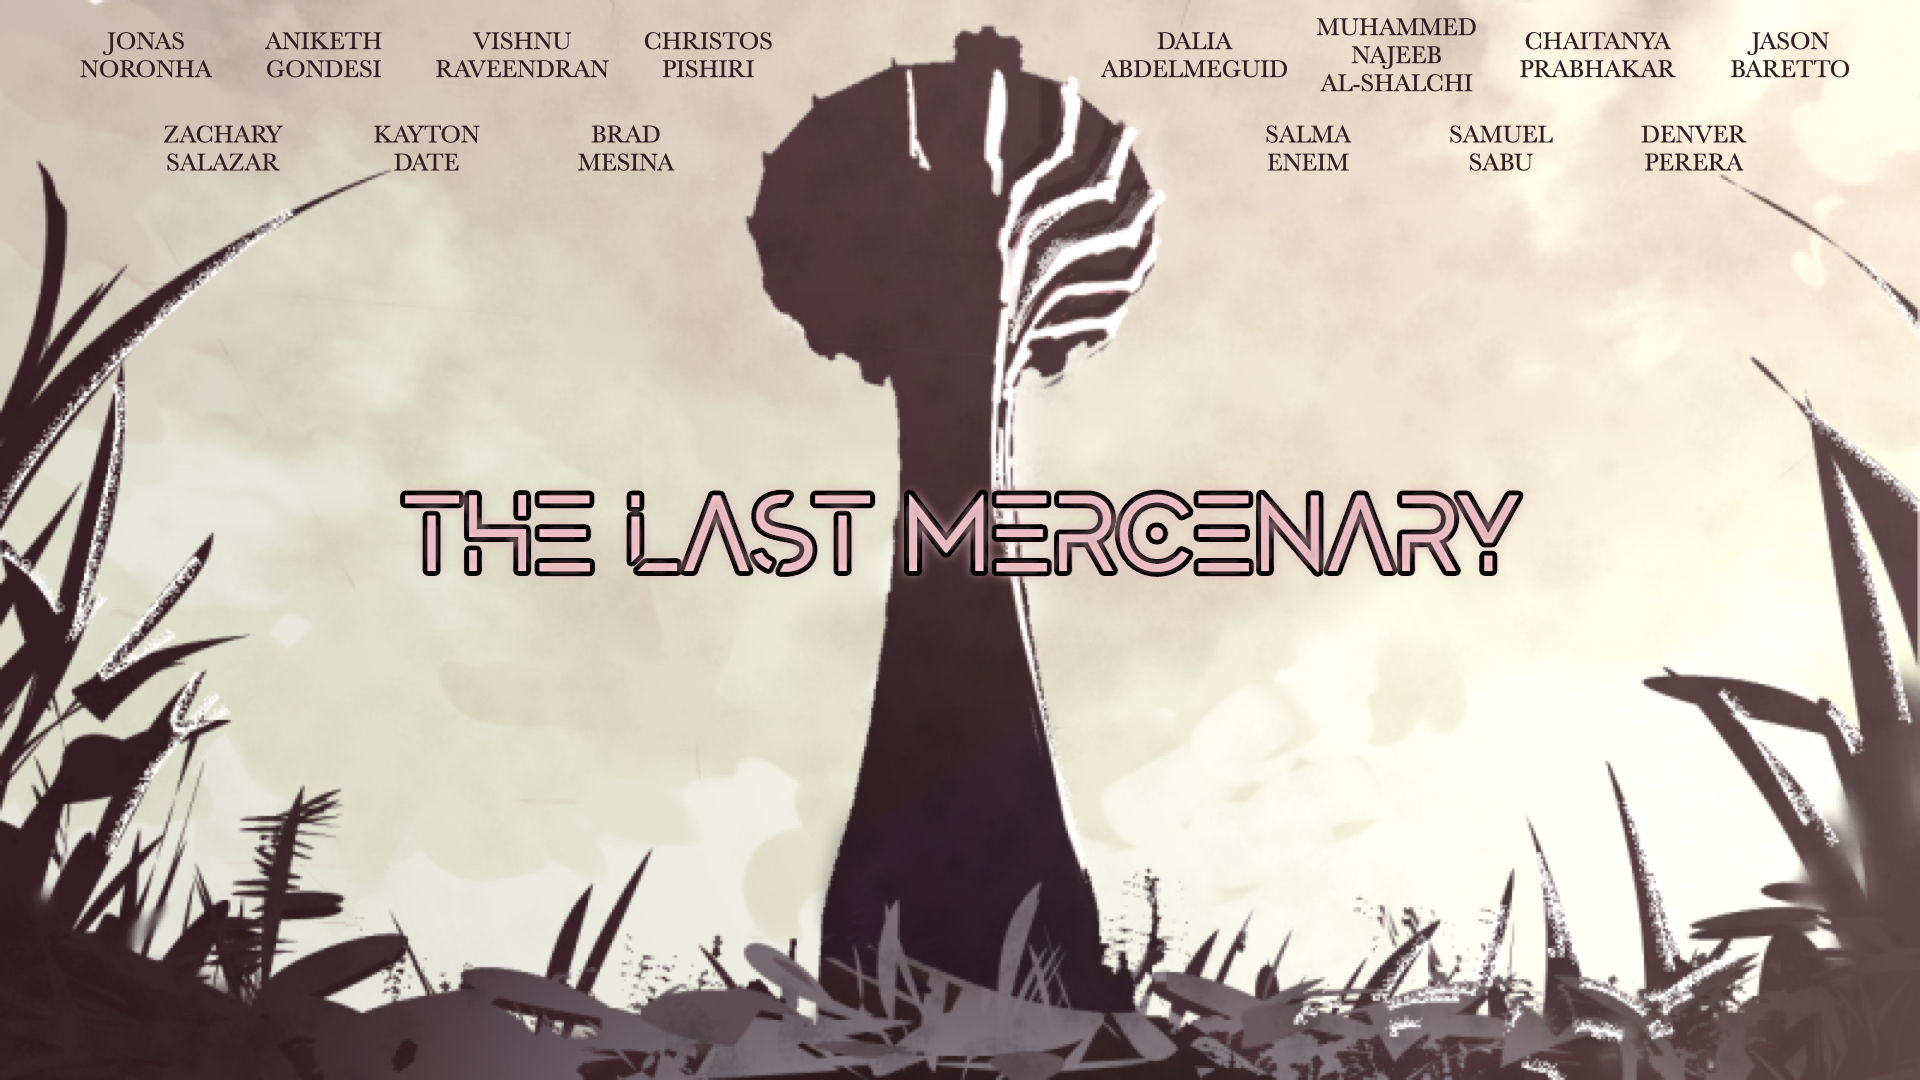 The Last Mercenary